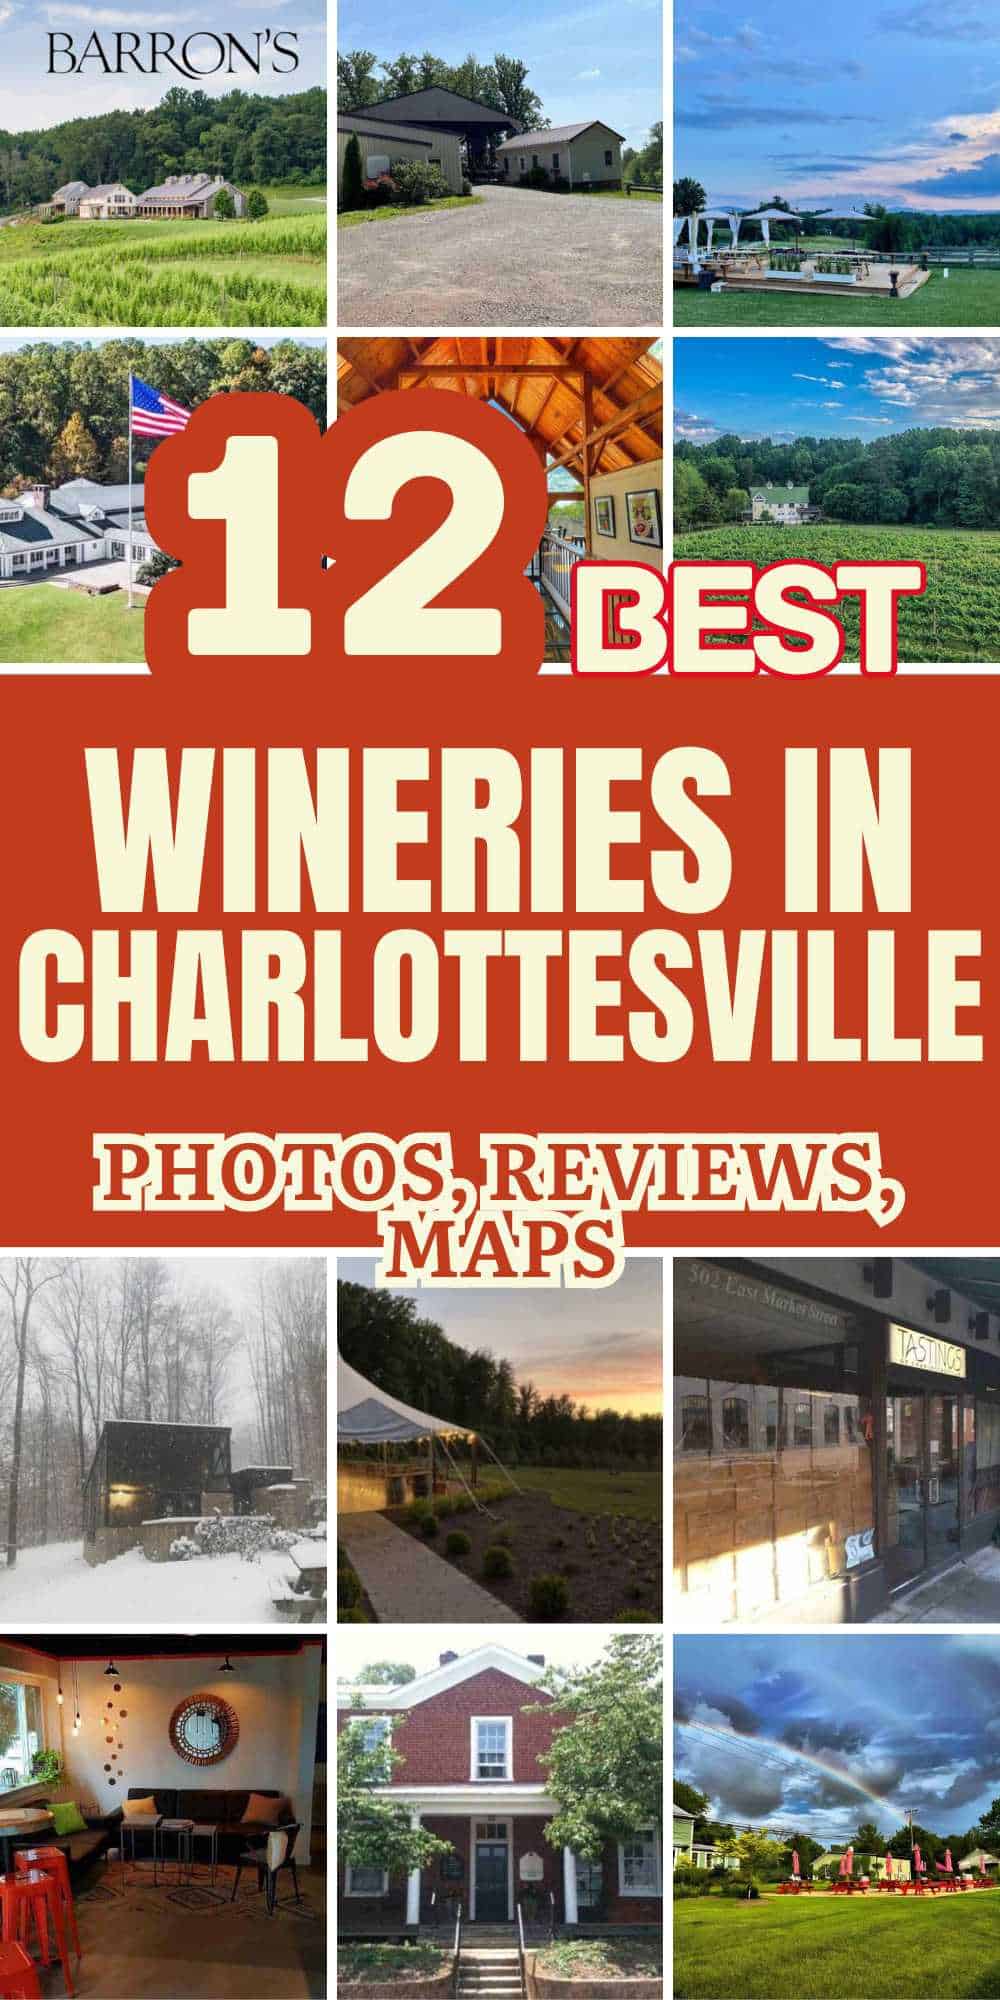 Best Wineries in Charlottesville